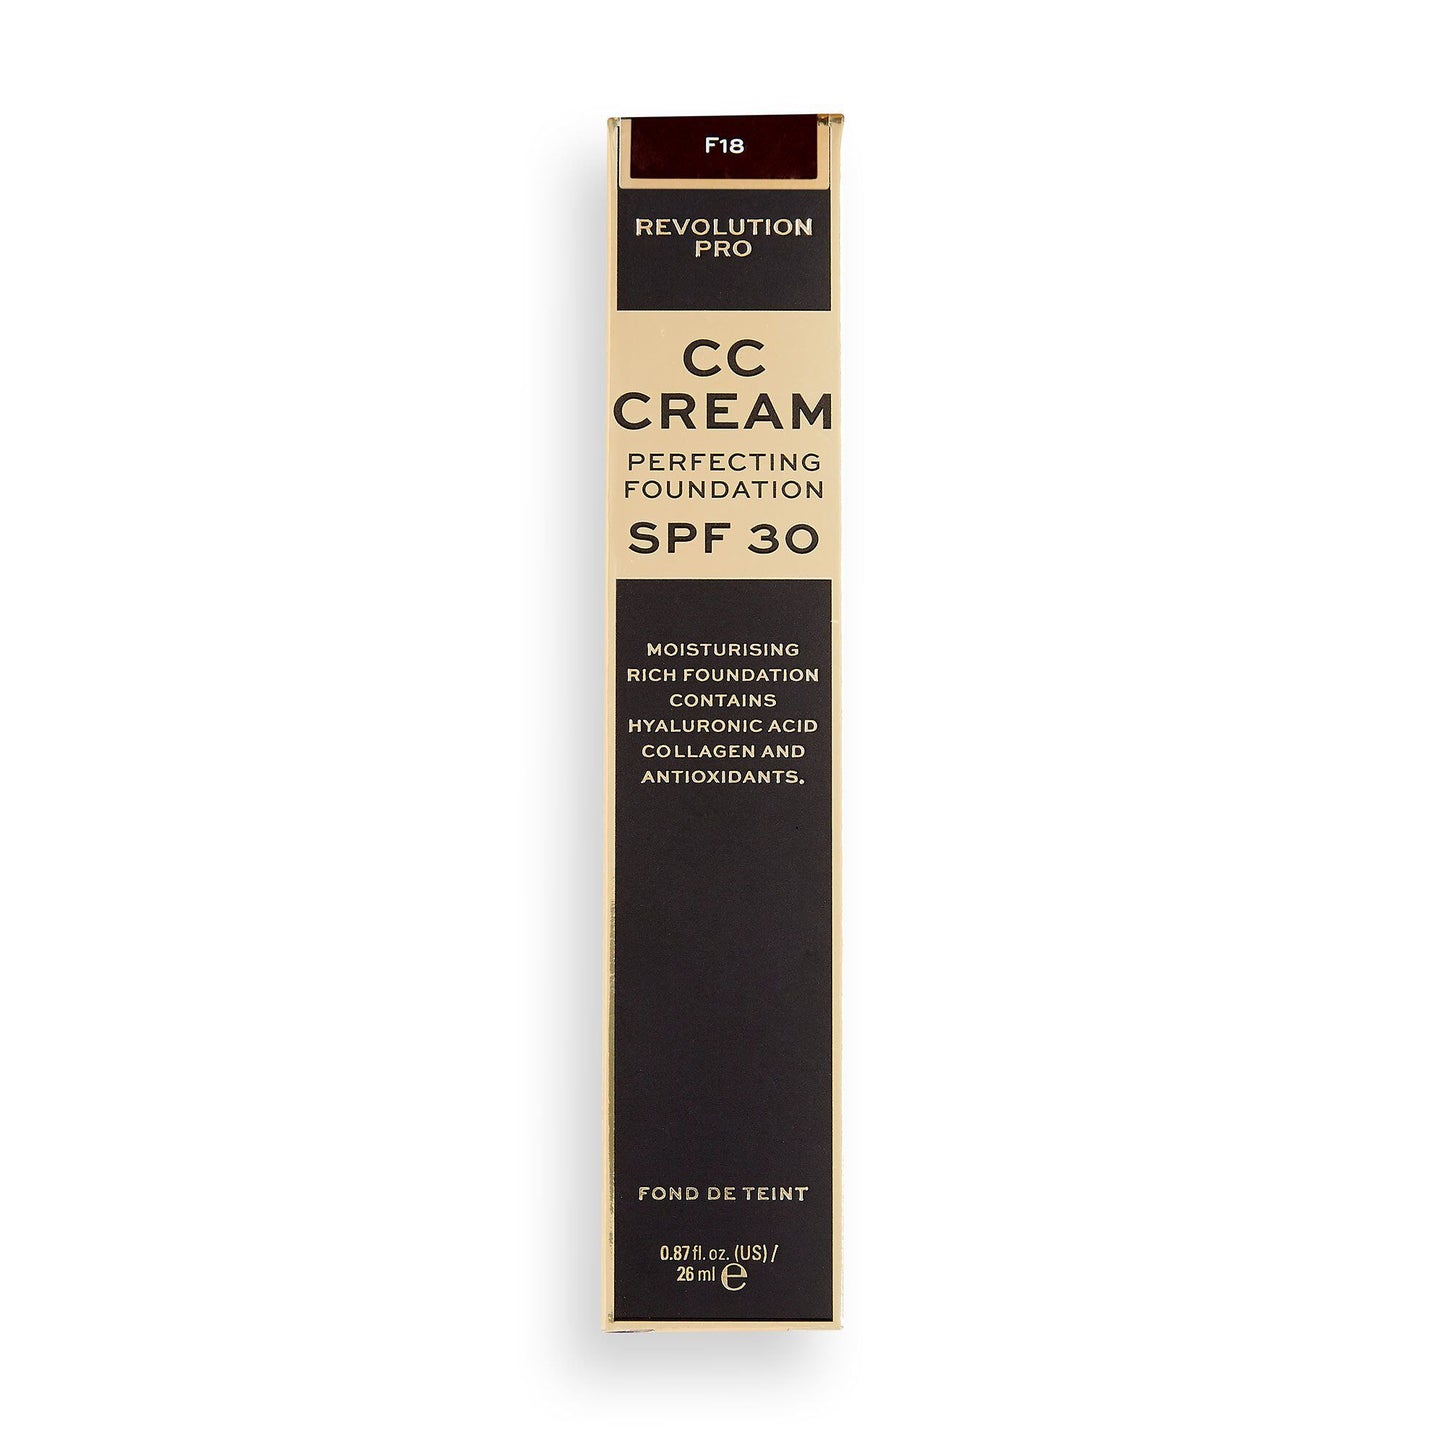 Revolution Pro CC Cream Perfecting Foundation SPF30 F18